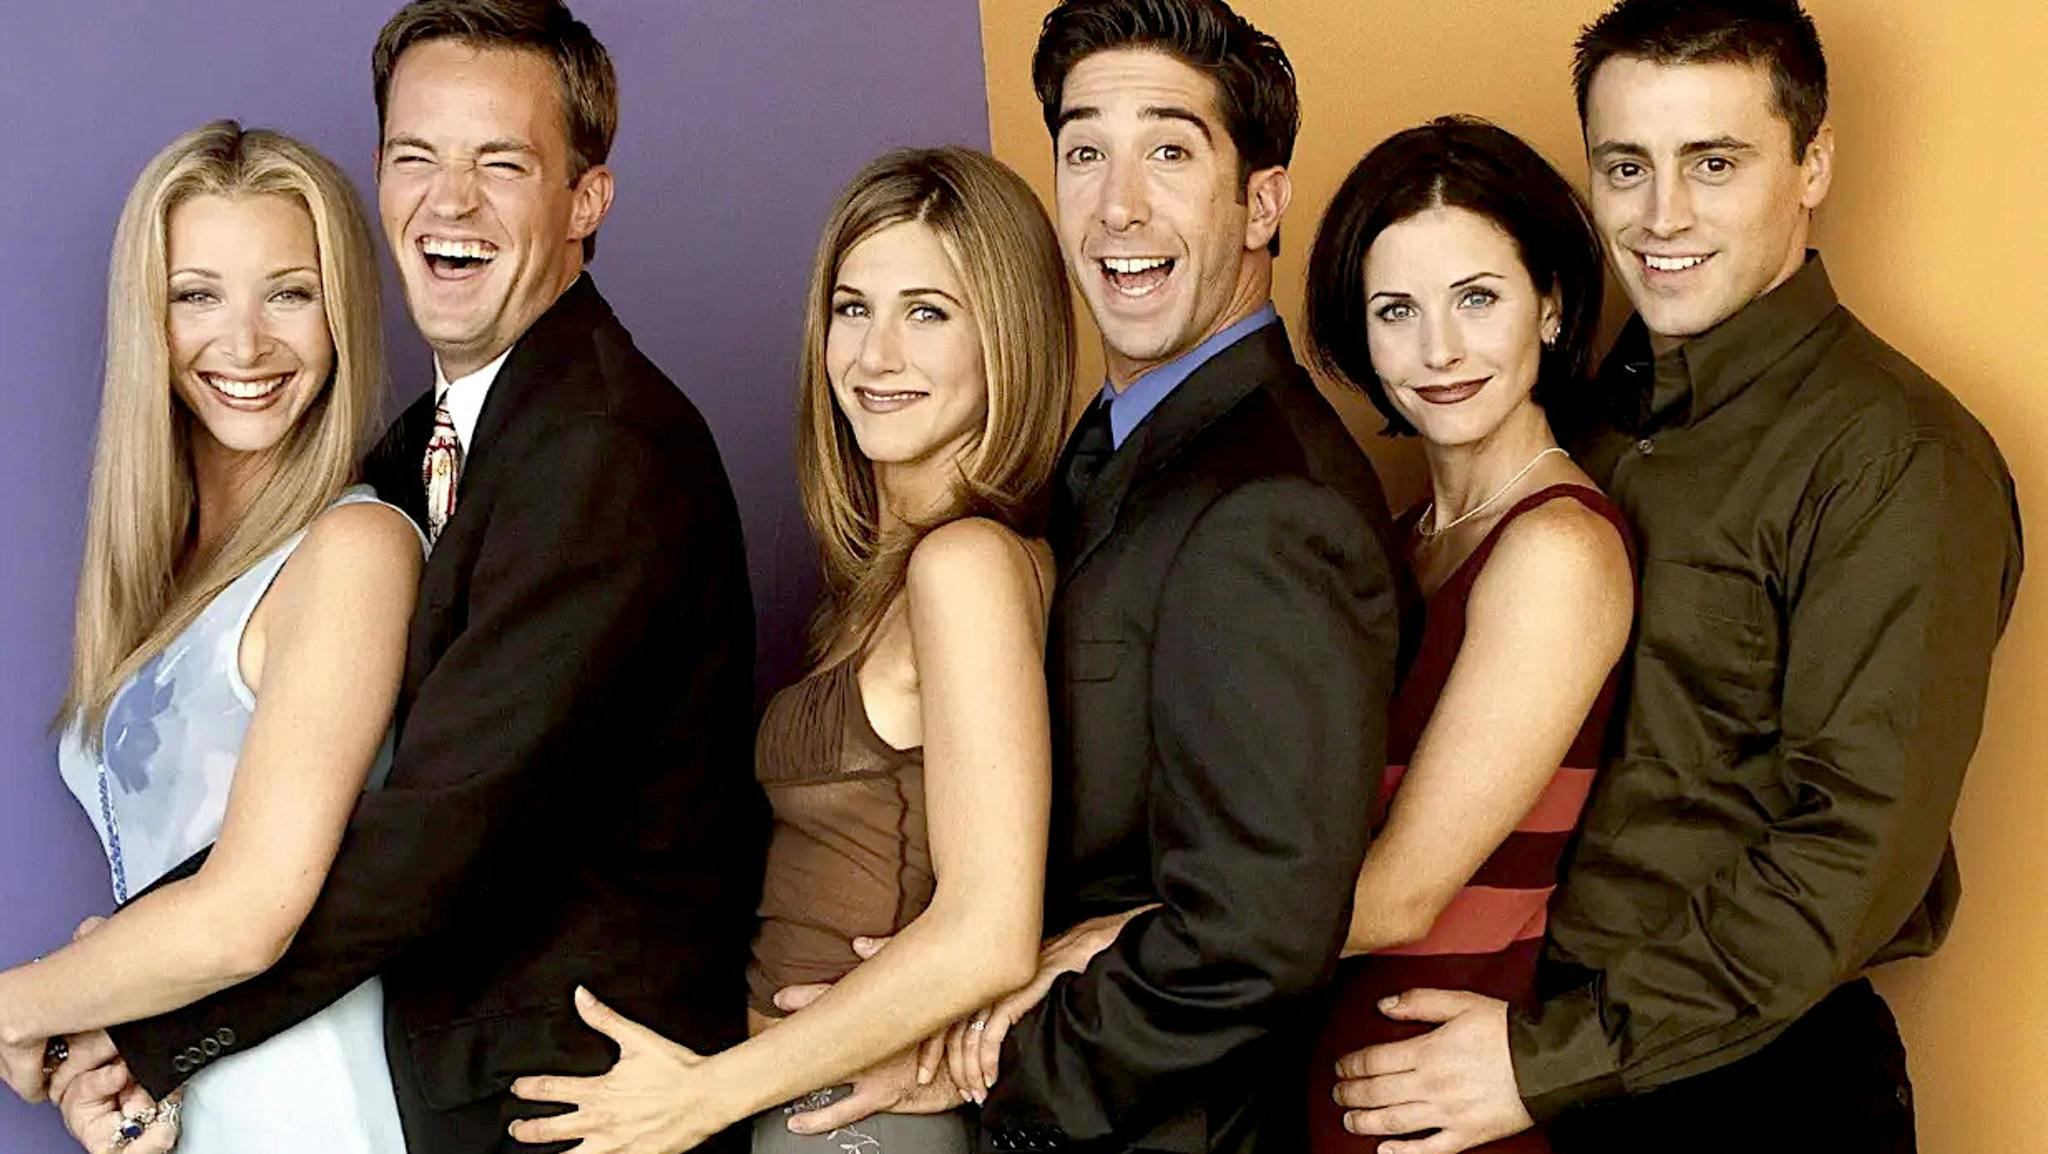 Imagen promocional de la serie 'Friends', que se emitió de 1994 a 2004